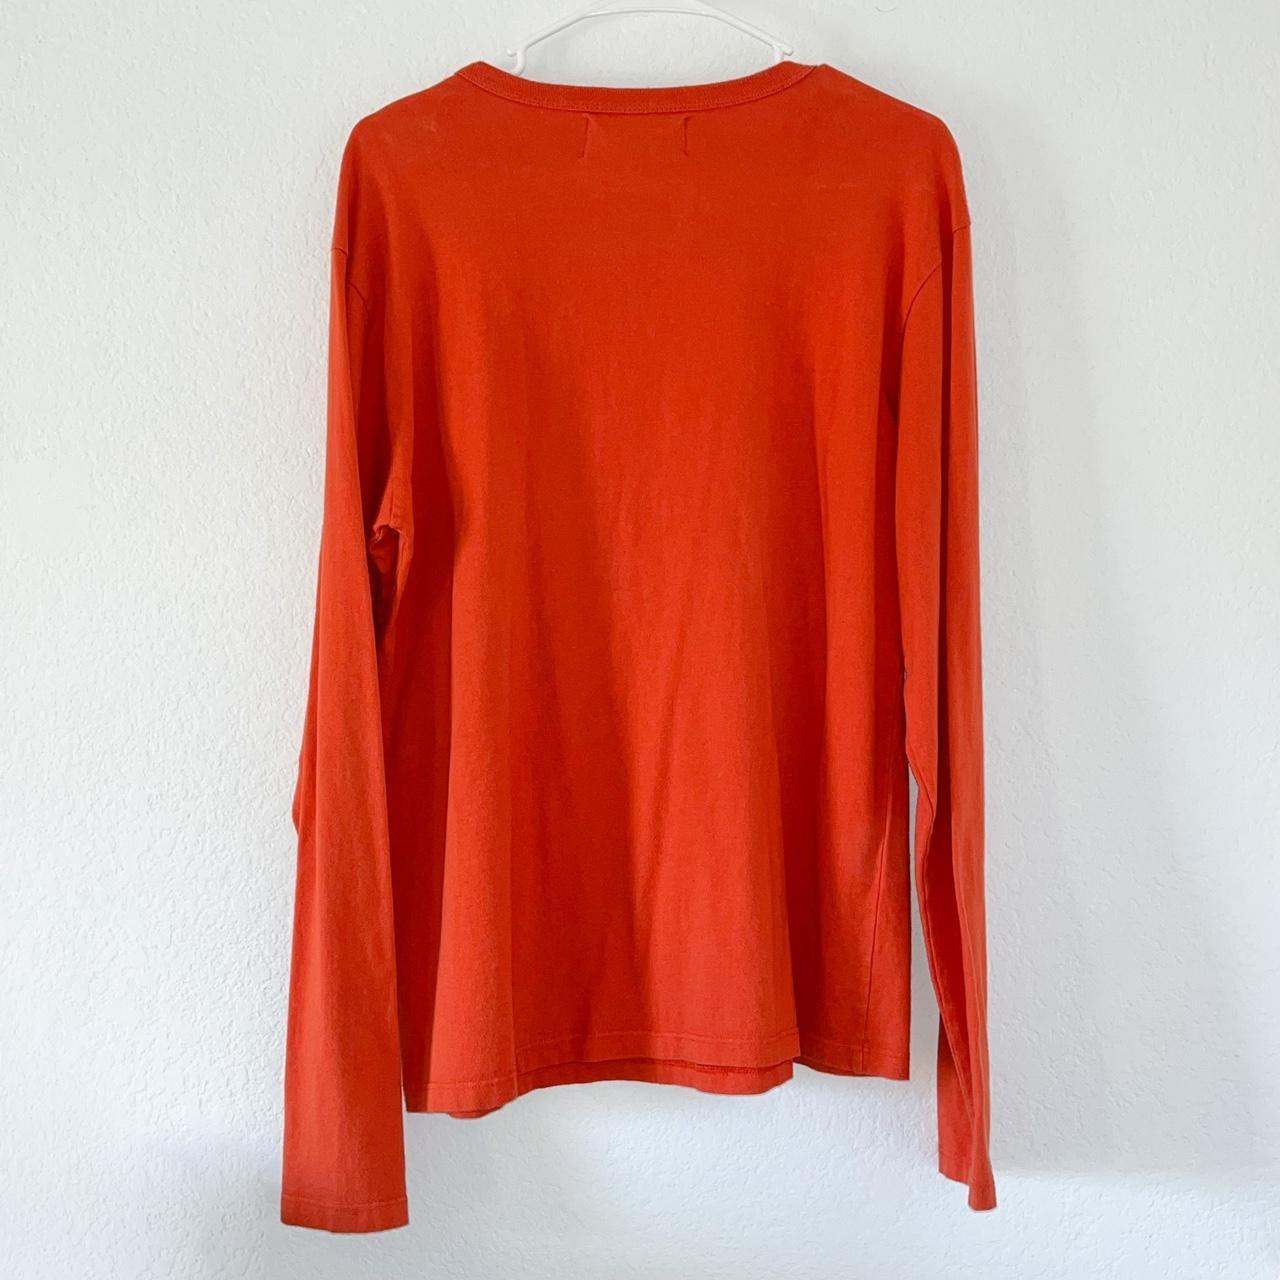 Bianca Chandon Men's Orange and Black Shirt (3)